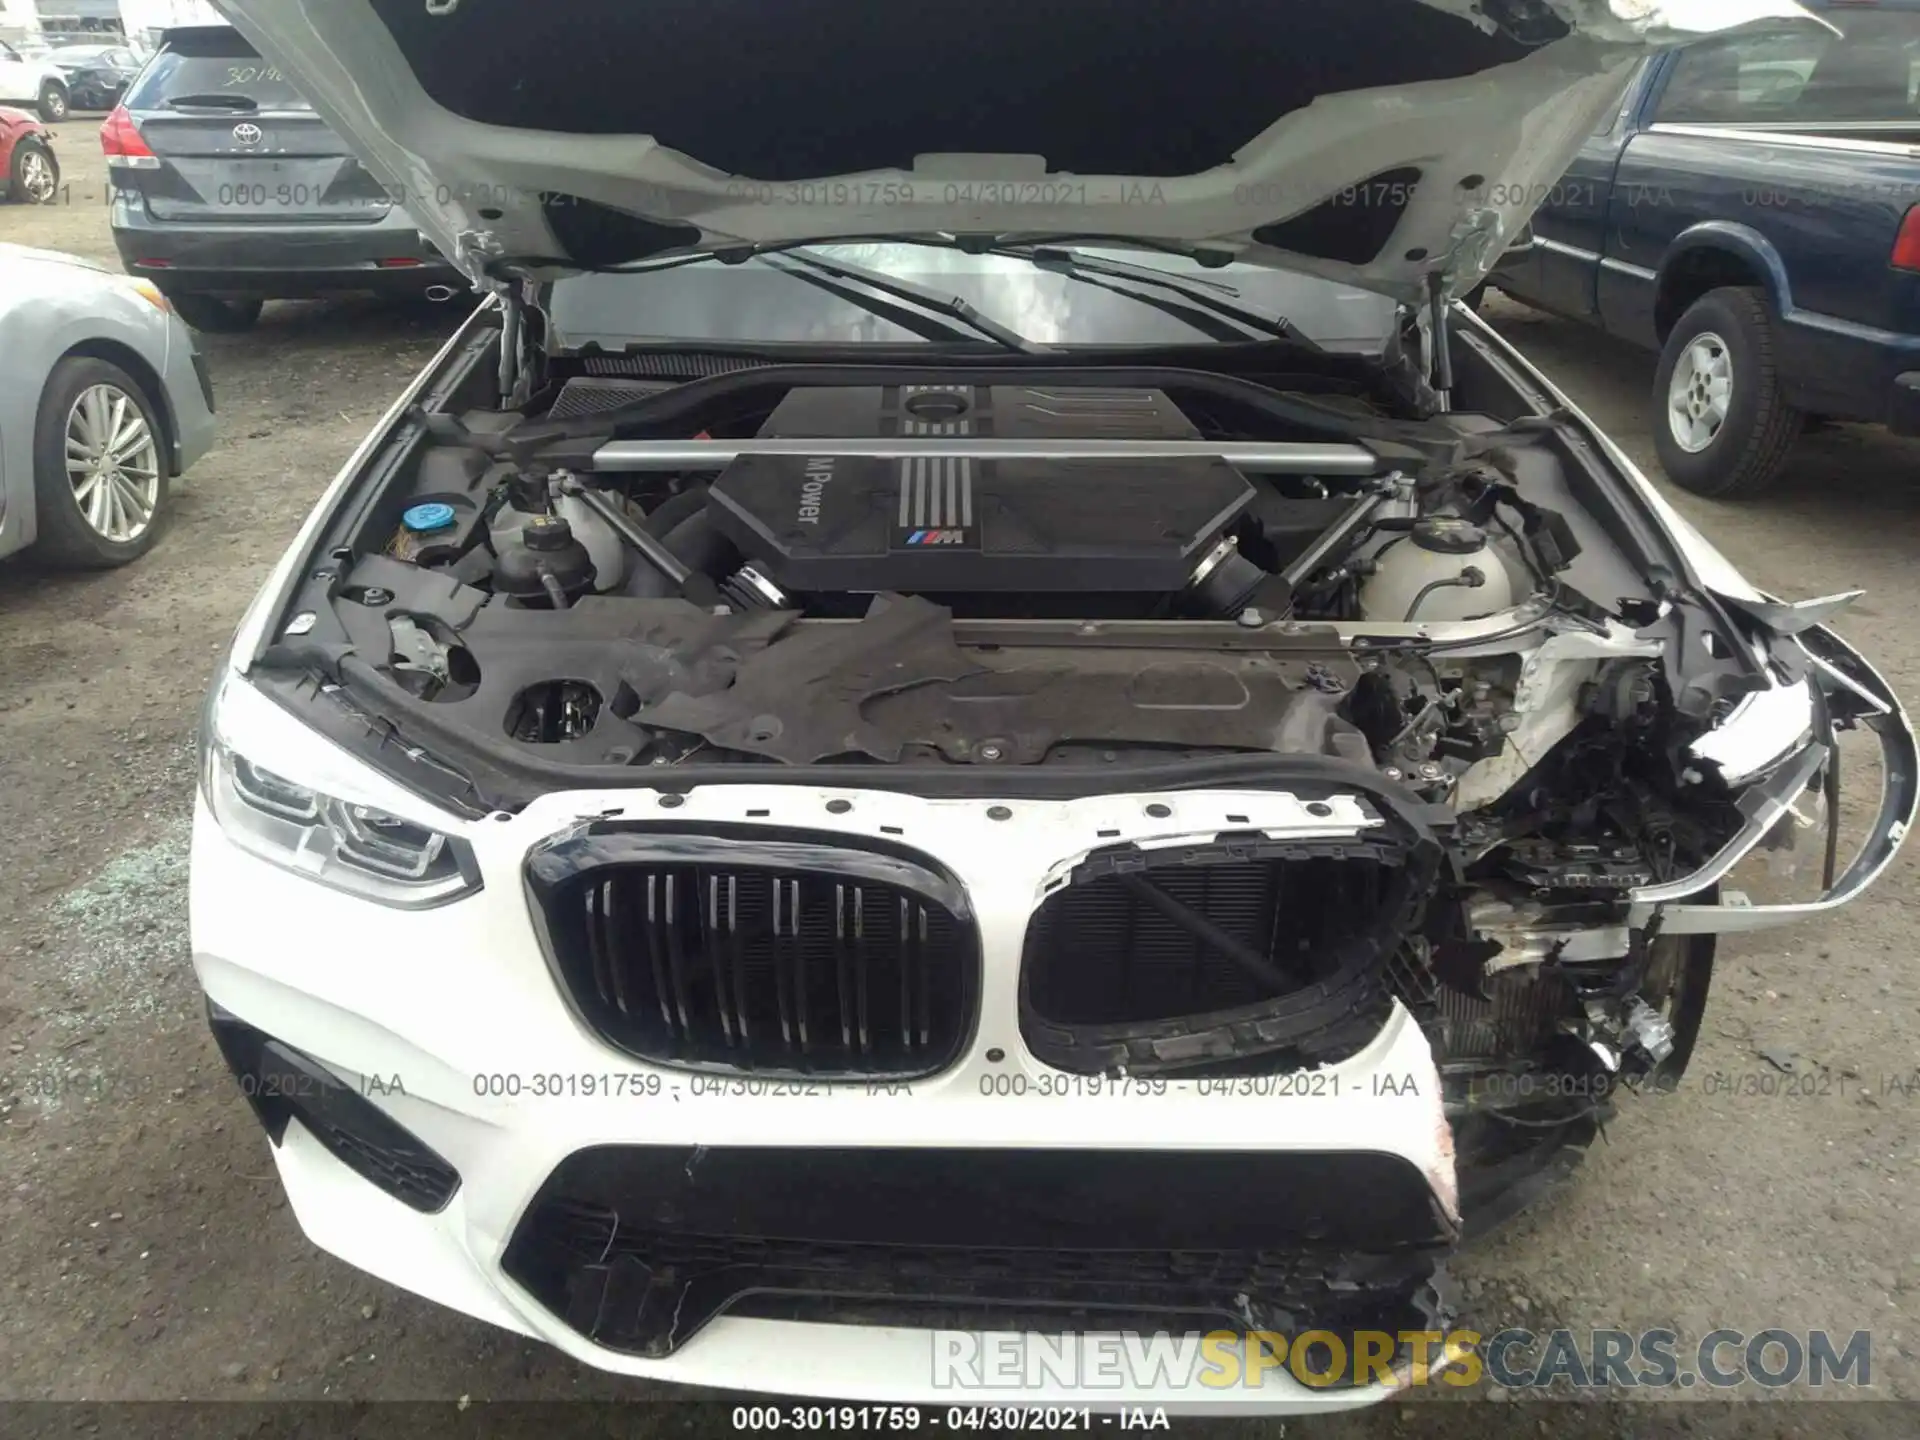 10 Photograph of a damaged car 5YMTS0C00L9B55080 BMW X3 M 2020